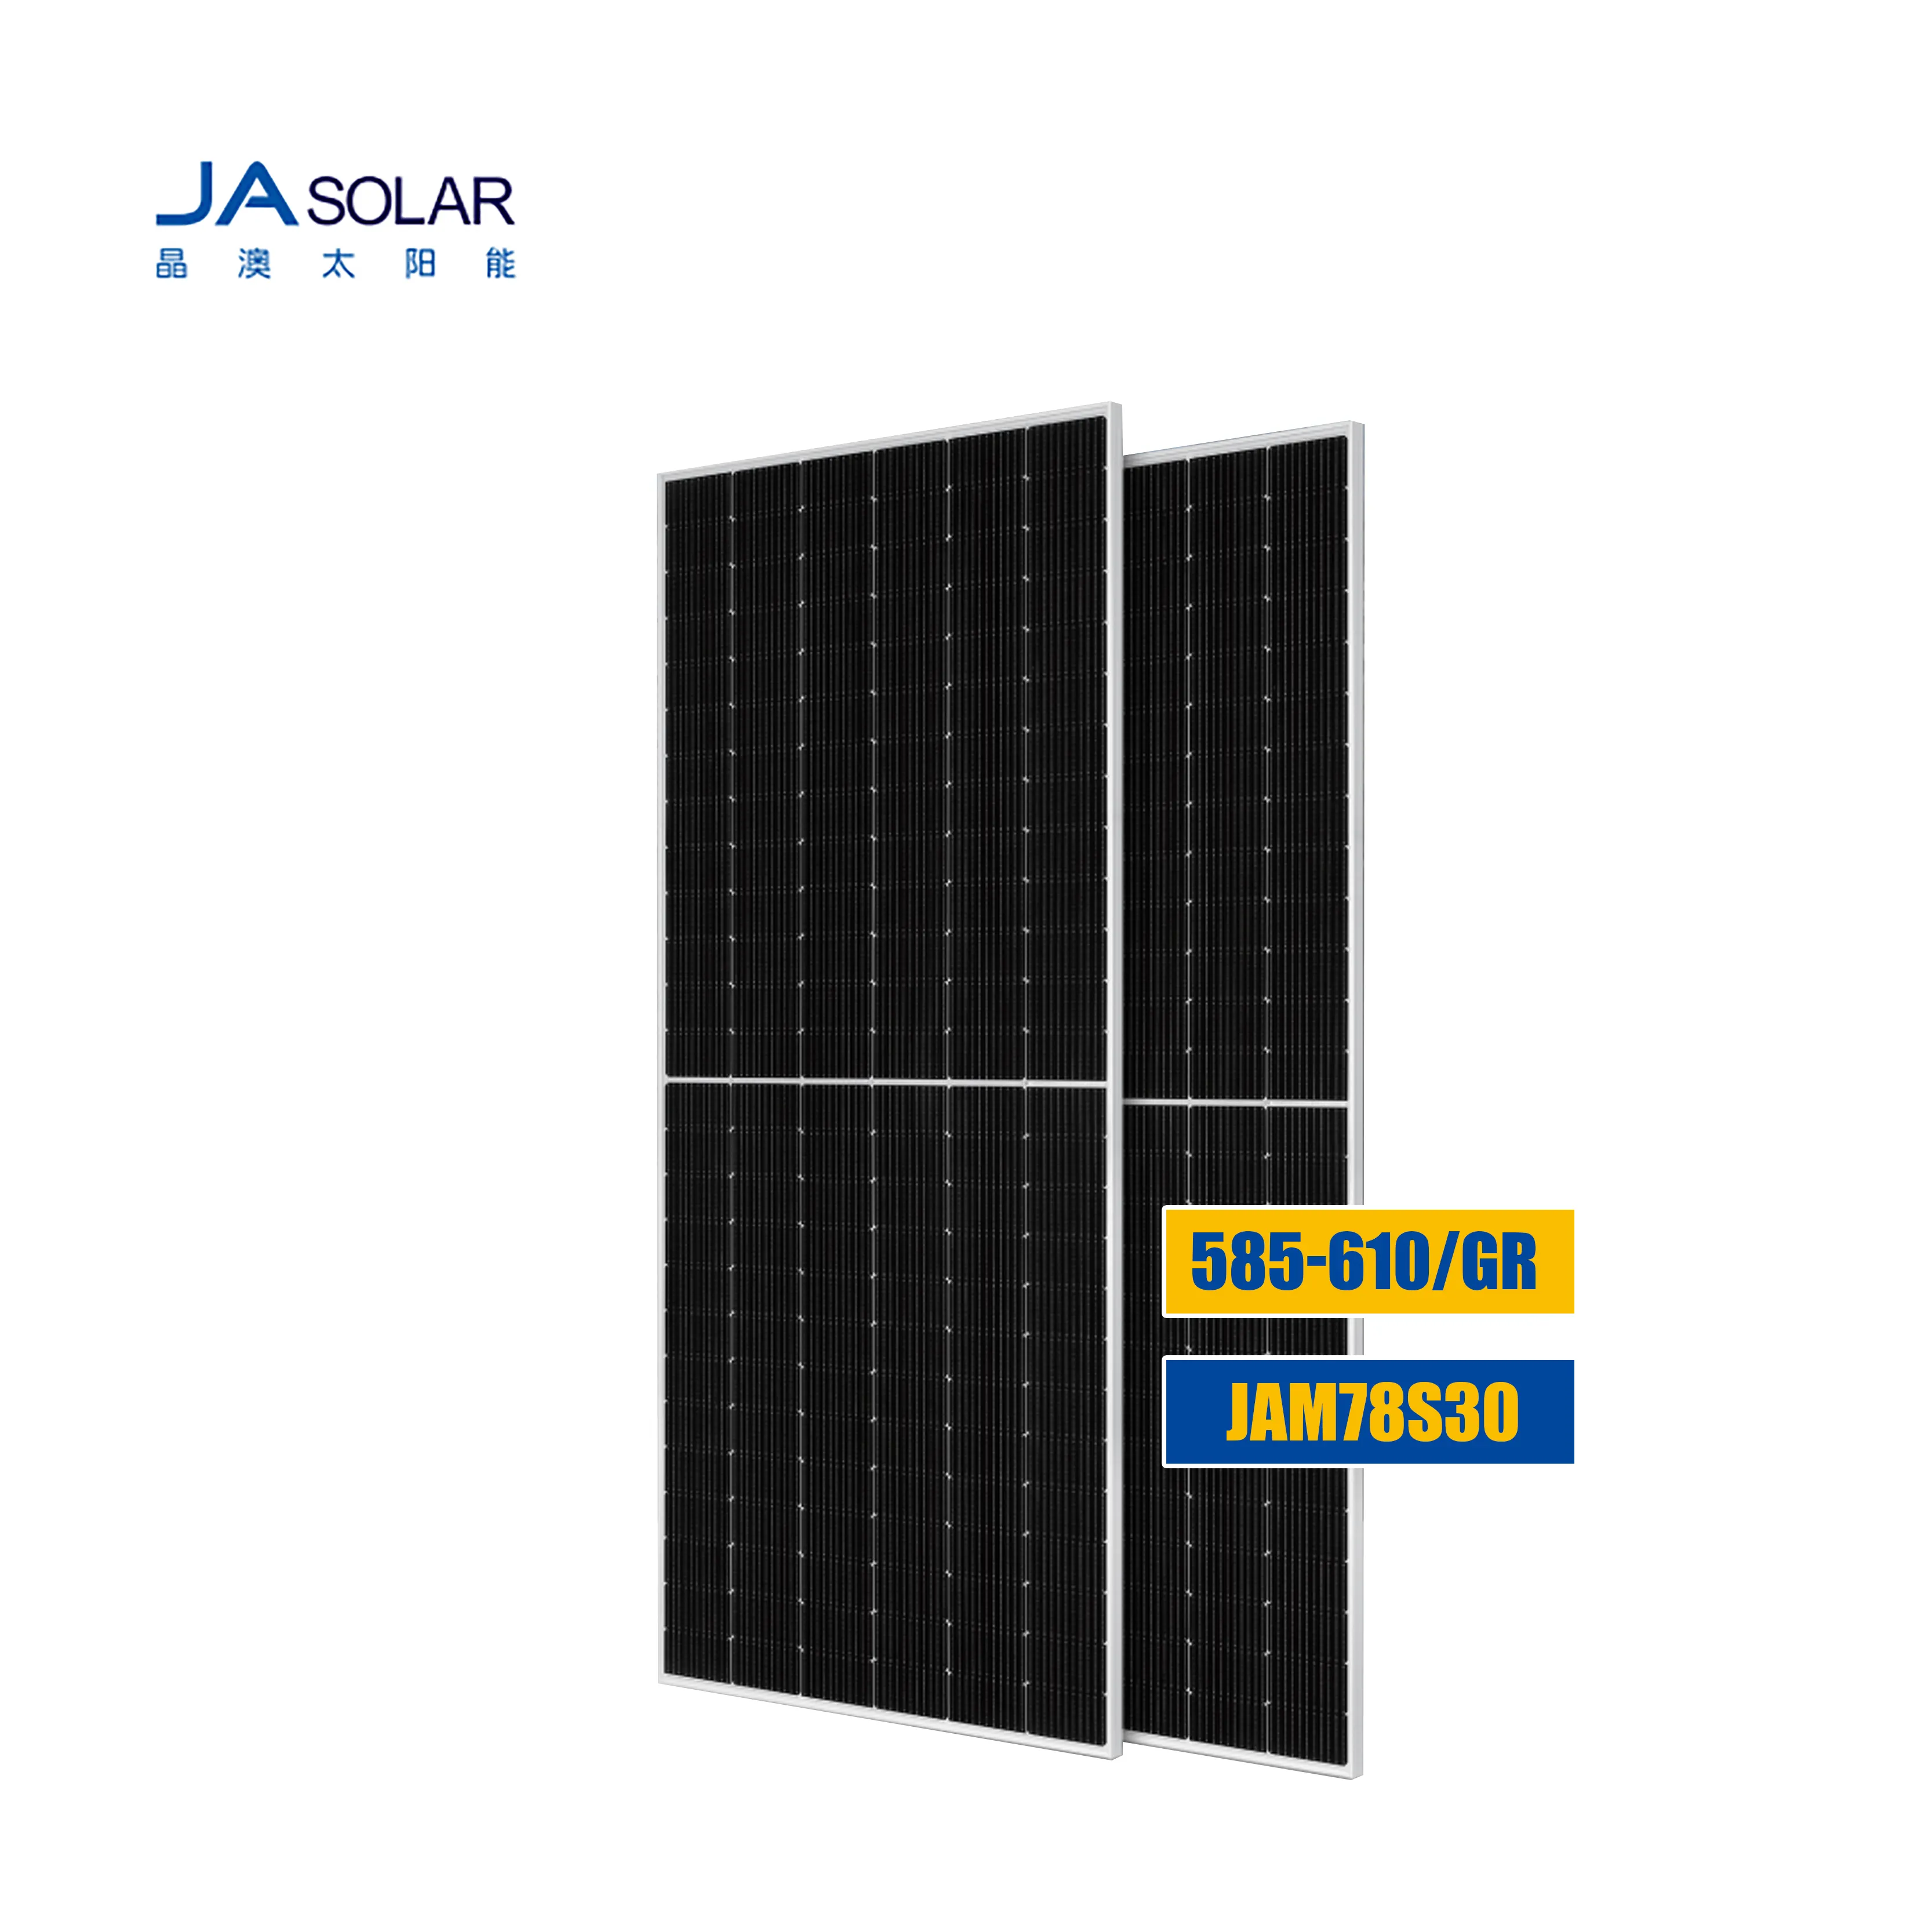 JA Wholesale Hot Product JAM78S30 585-610/GR 585W 590W 595W 600W 605W 610W Solar Panels